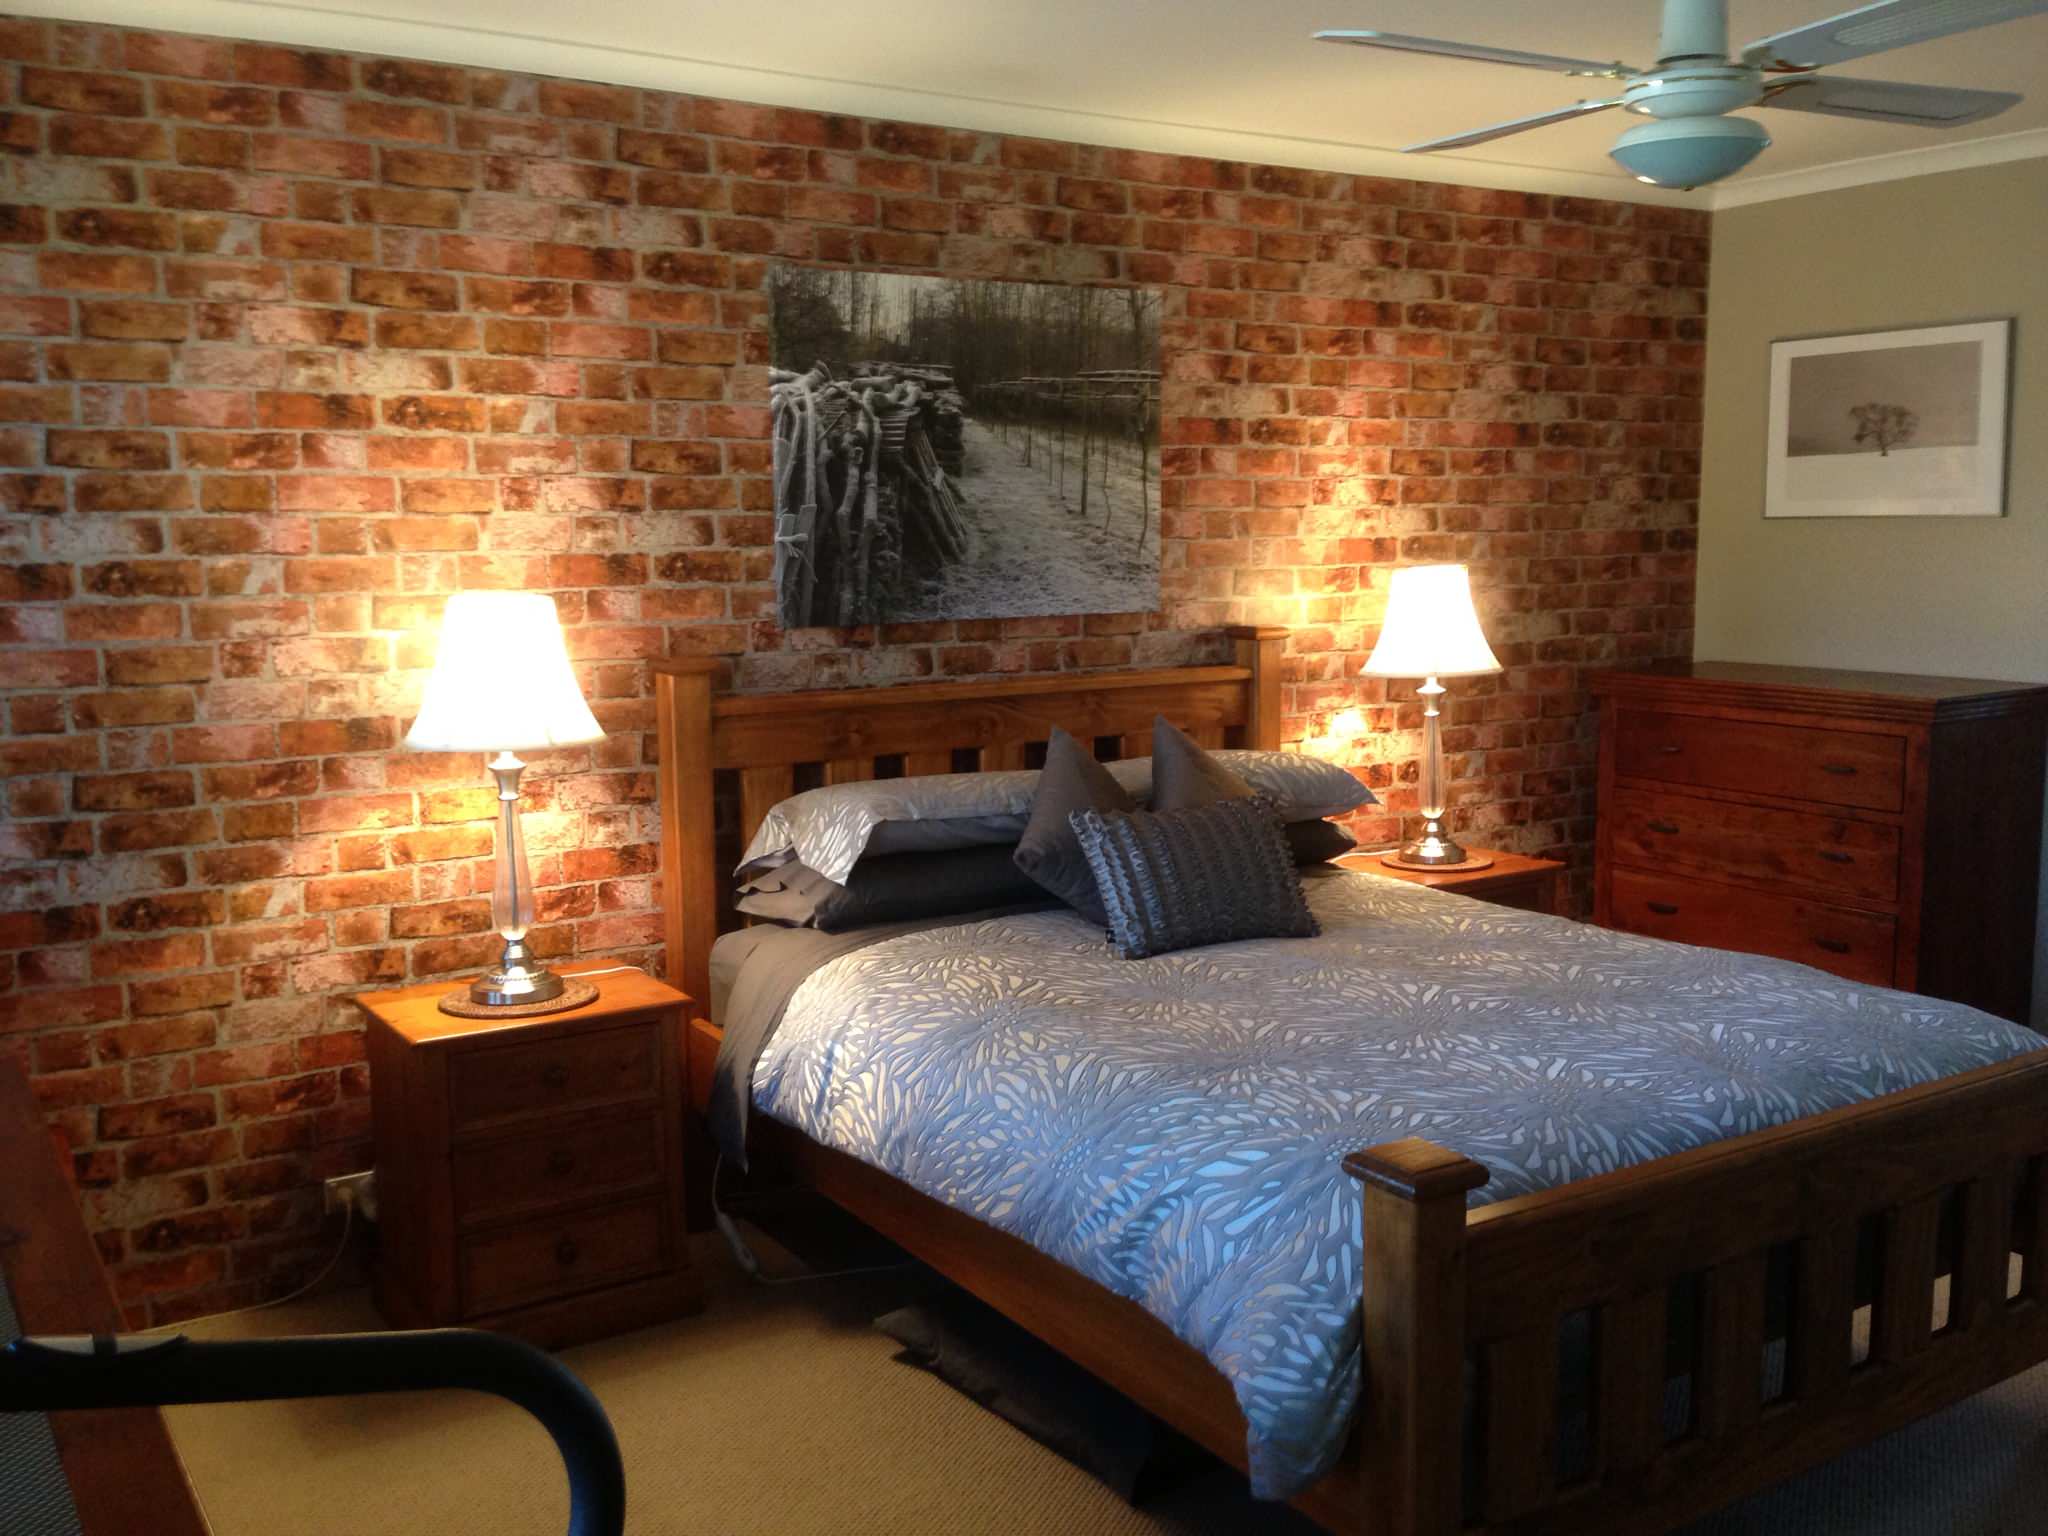 Bedroom Wallpaper Accent Wall - Photos & Ideas | Houzz